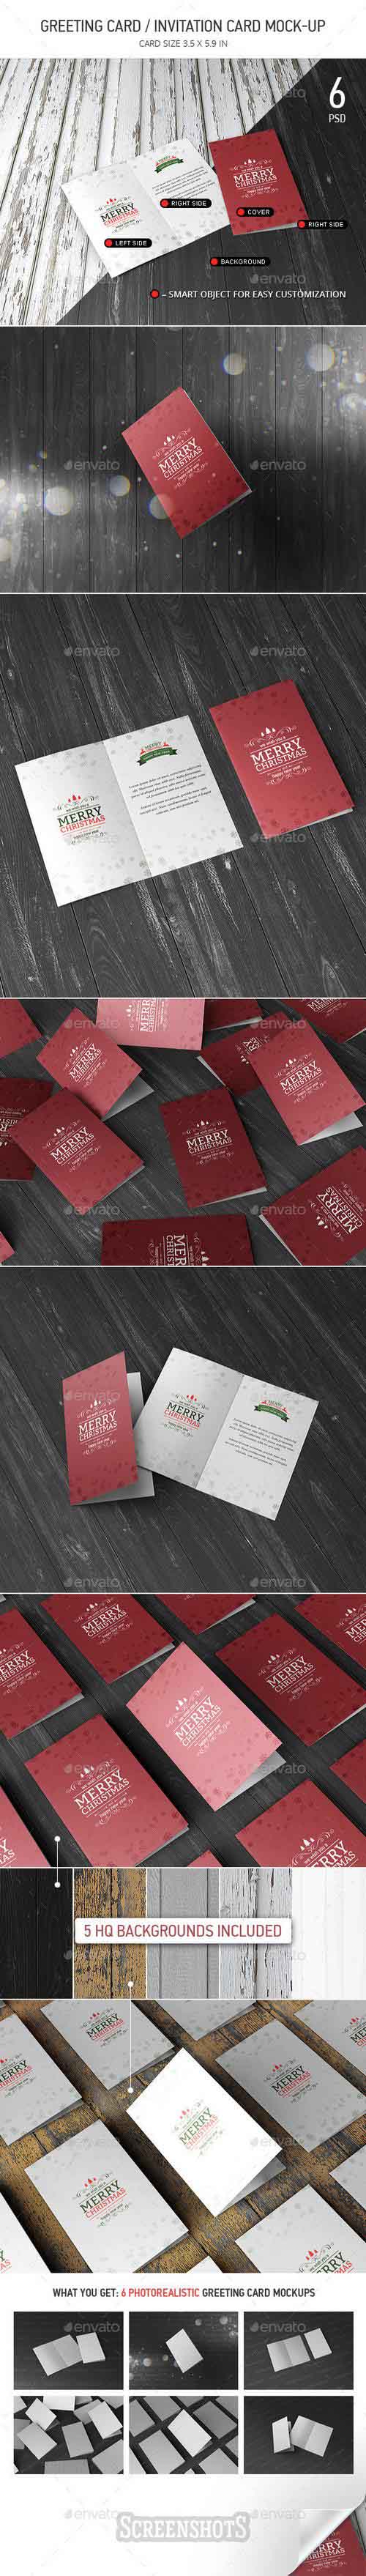 GraphicRiver - Greeting / Invitation Card Mock-Up